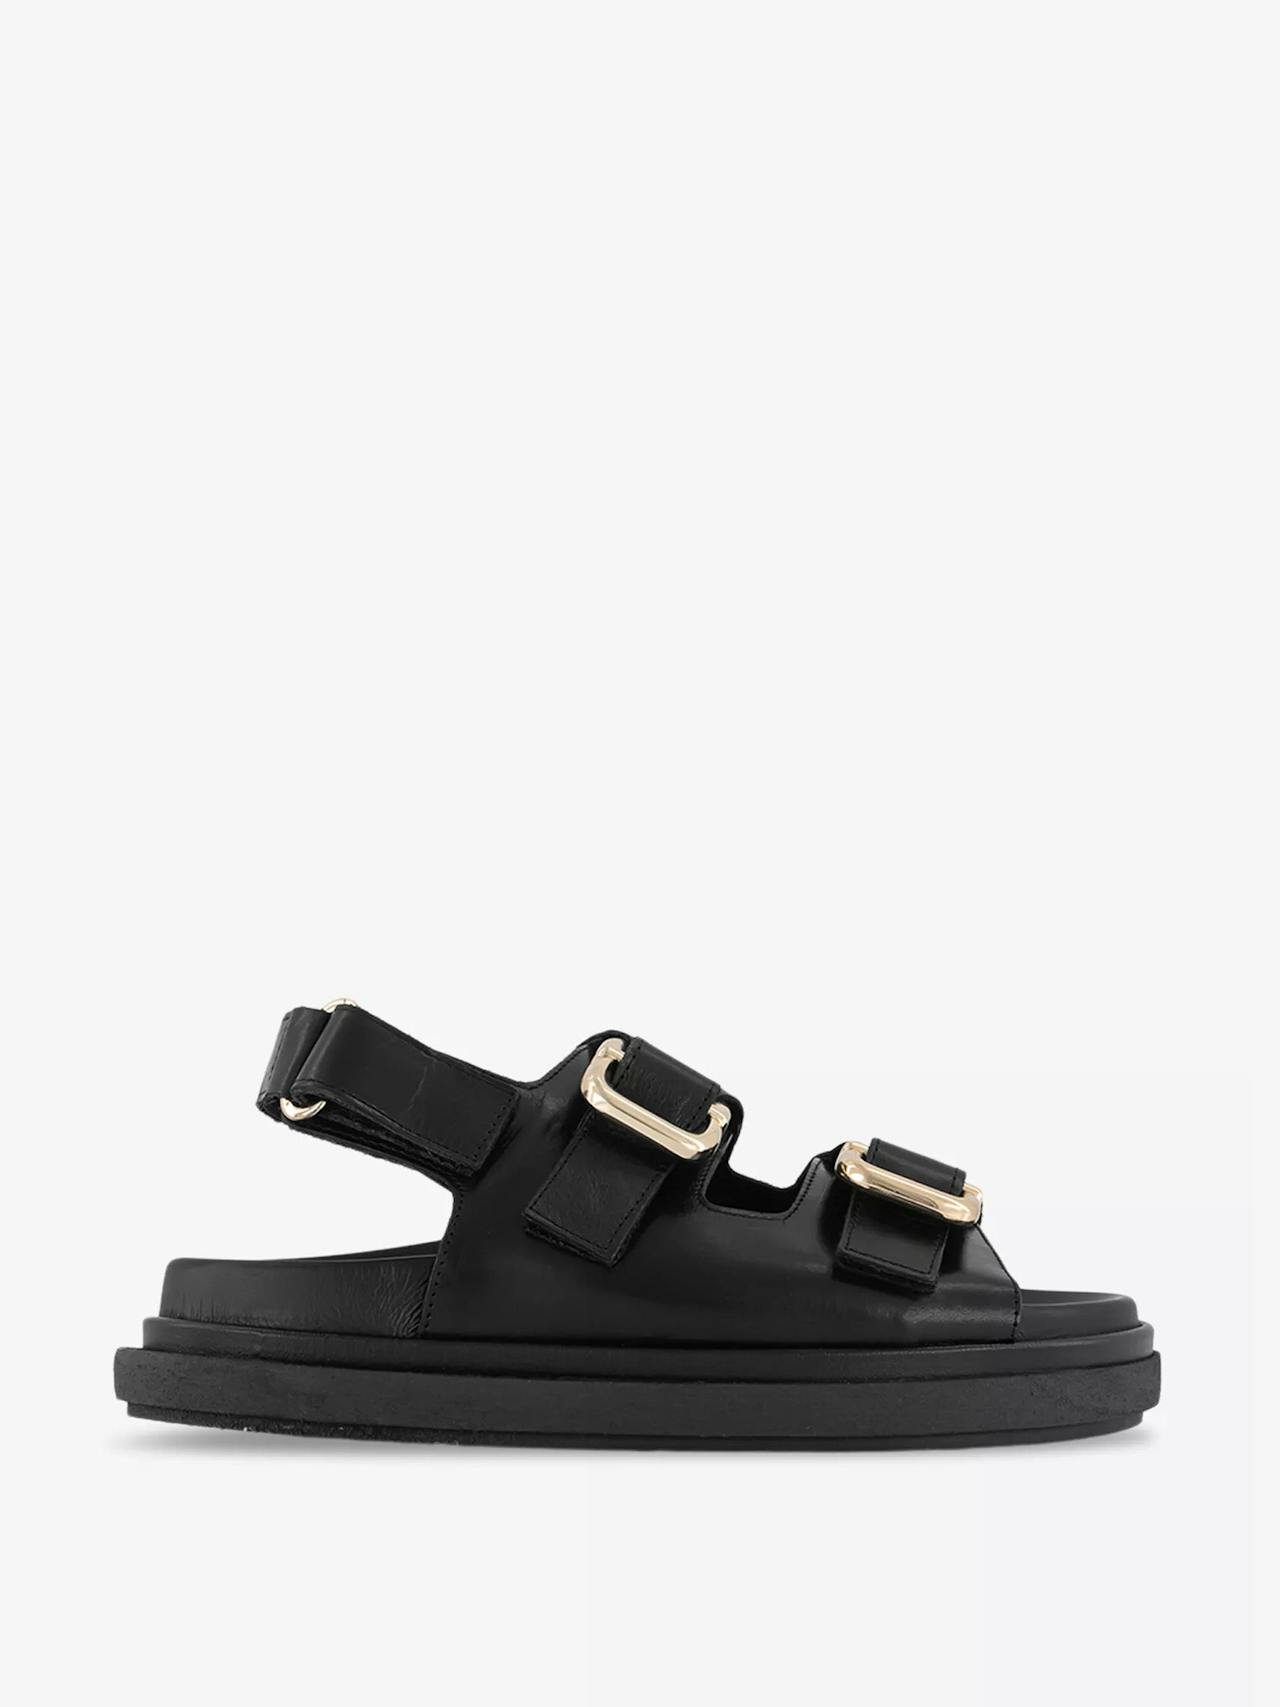 Harper buckle-straps leather sandals